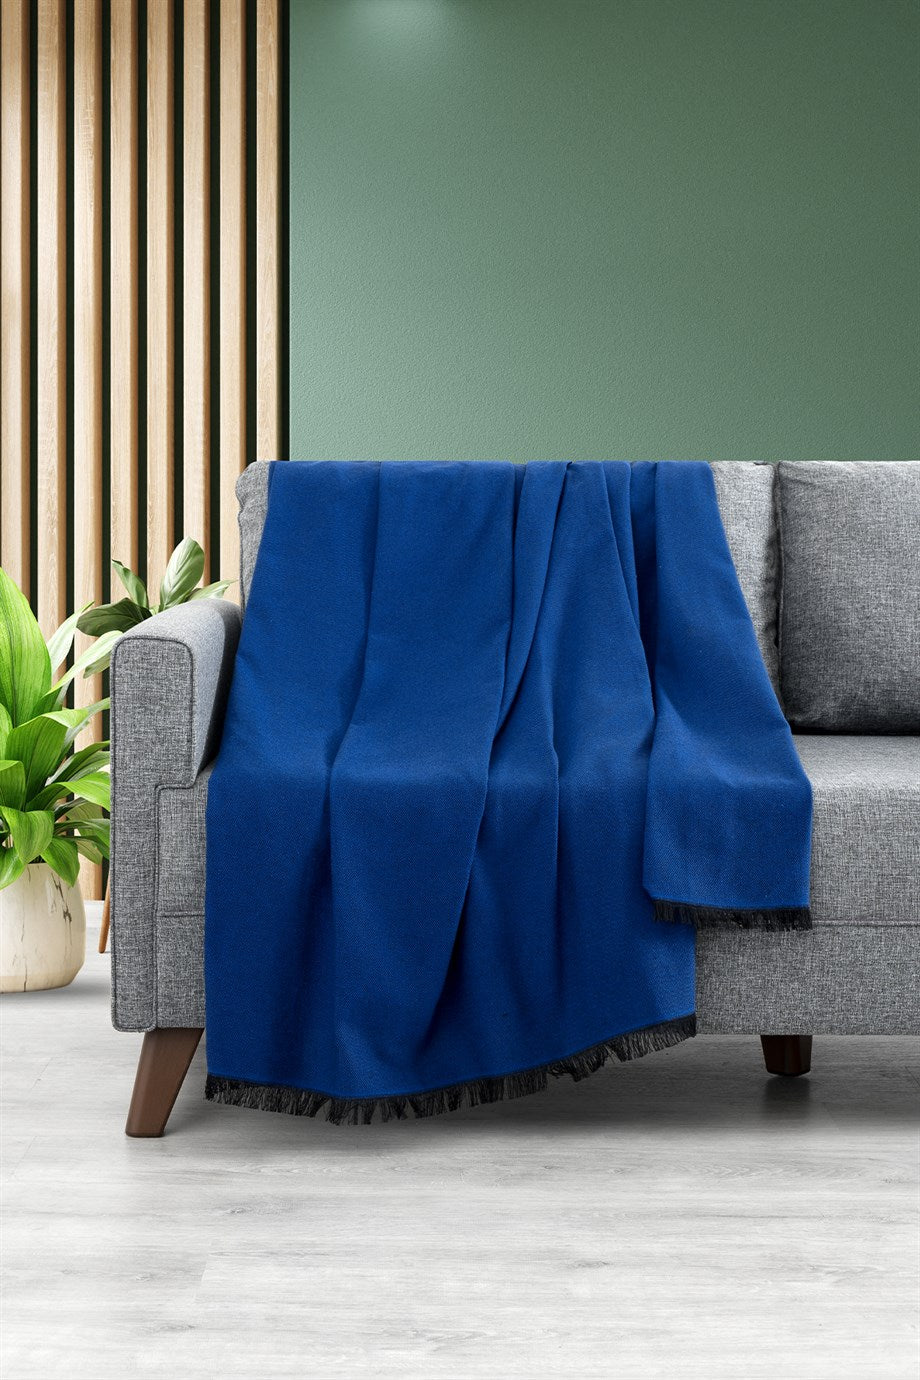 DENIZLI CONCEPT Lalin Sofa Cover Blue